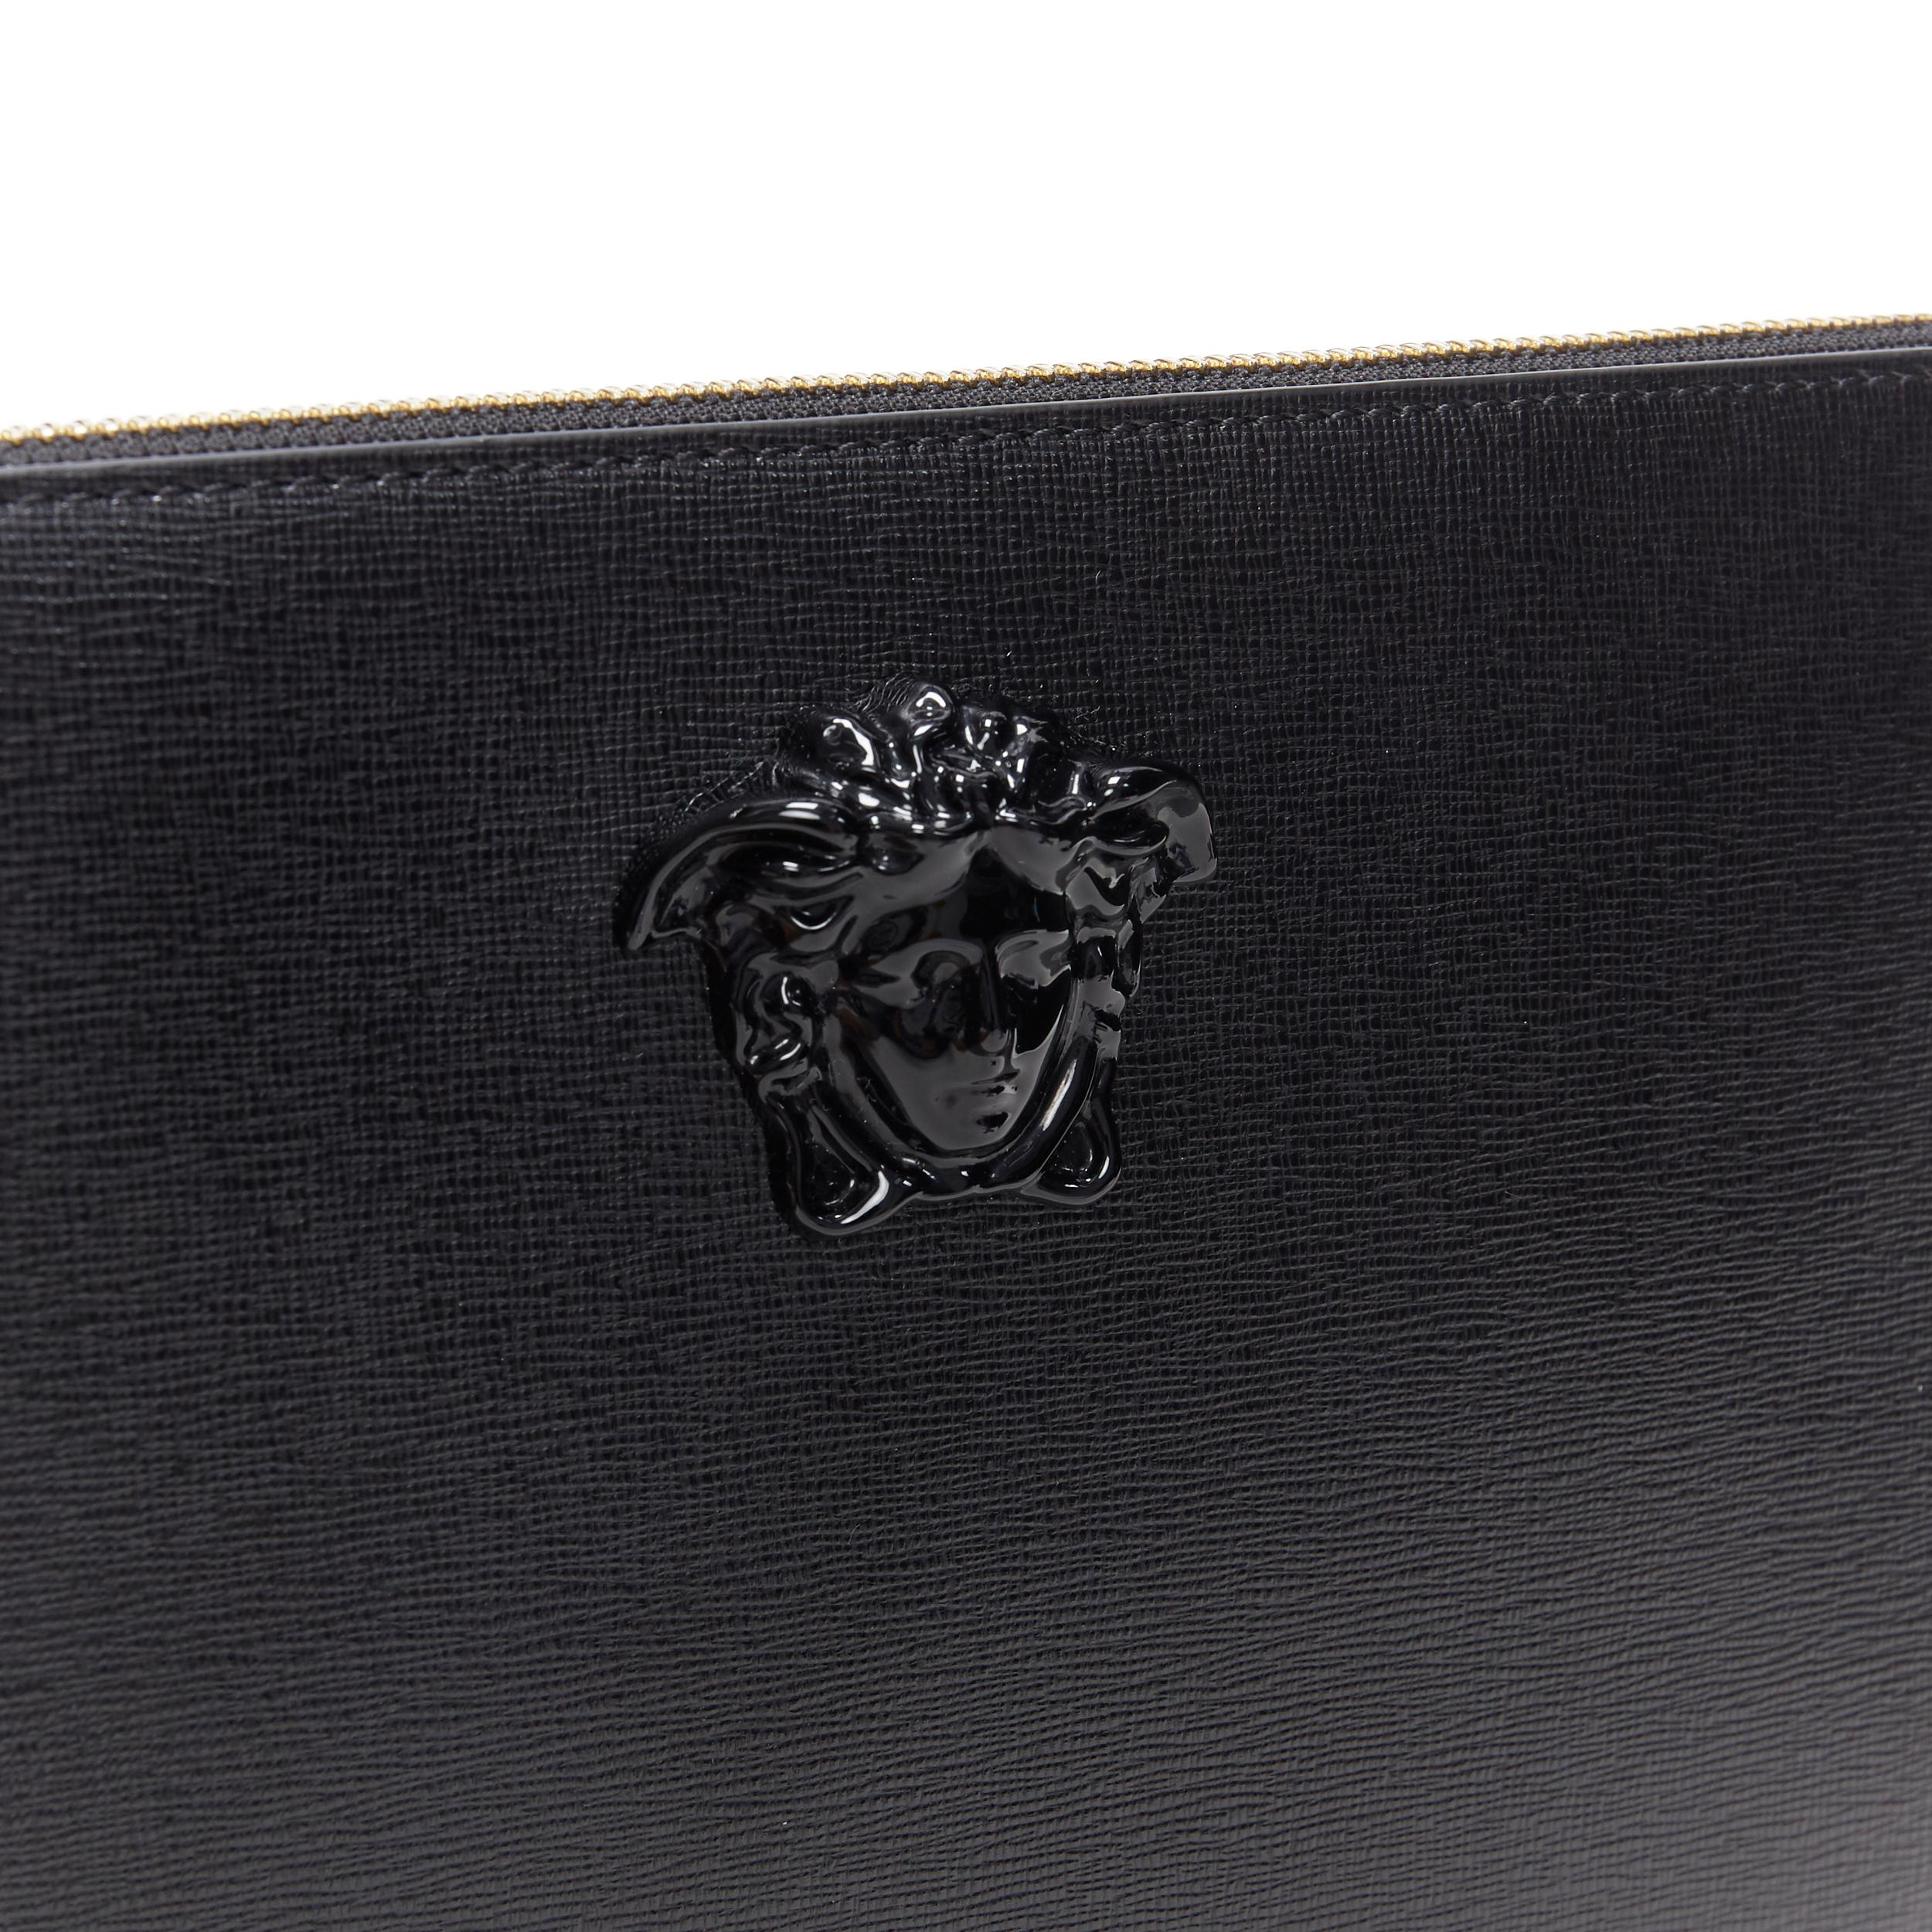 Black new VERSACE Palazzo Medusa black saffiano calf leather wristlet pouch clutch bag